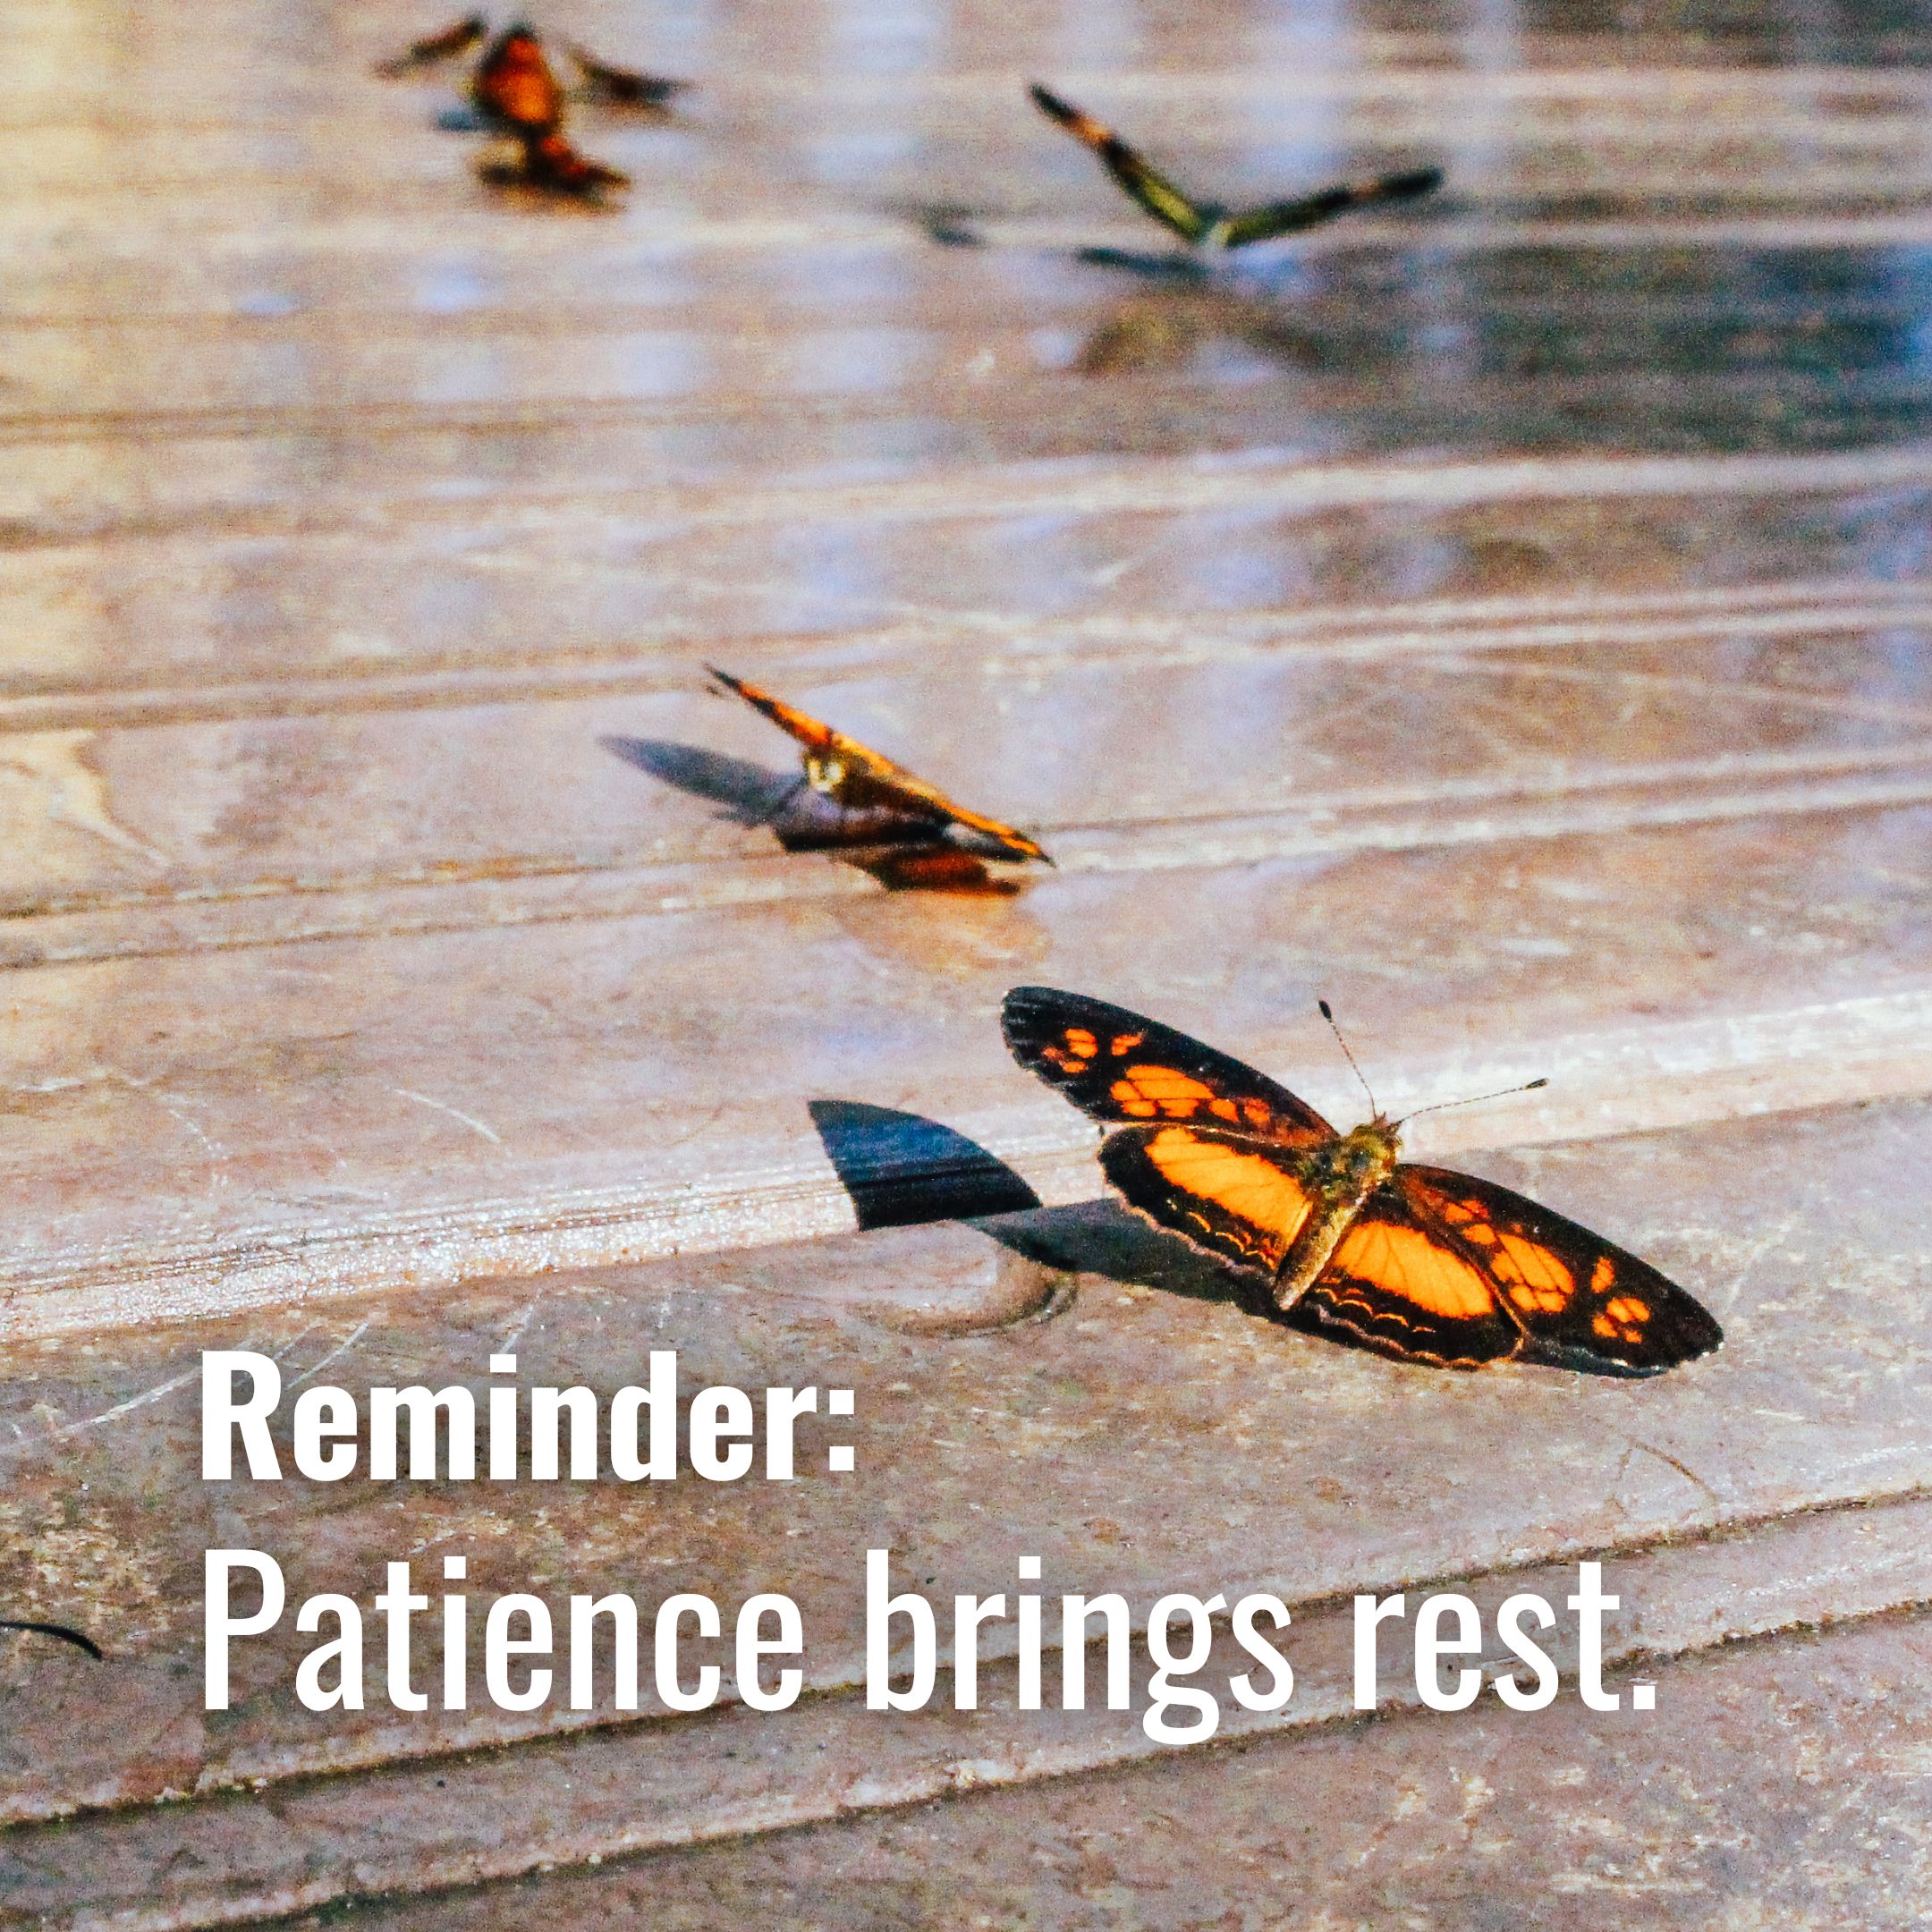 Patience brings rest.